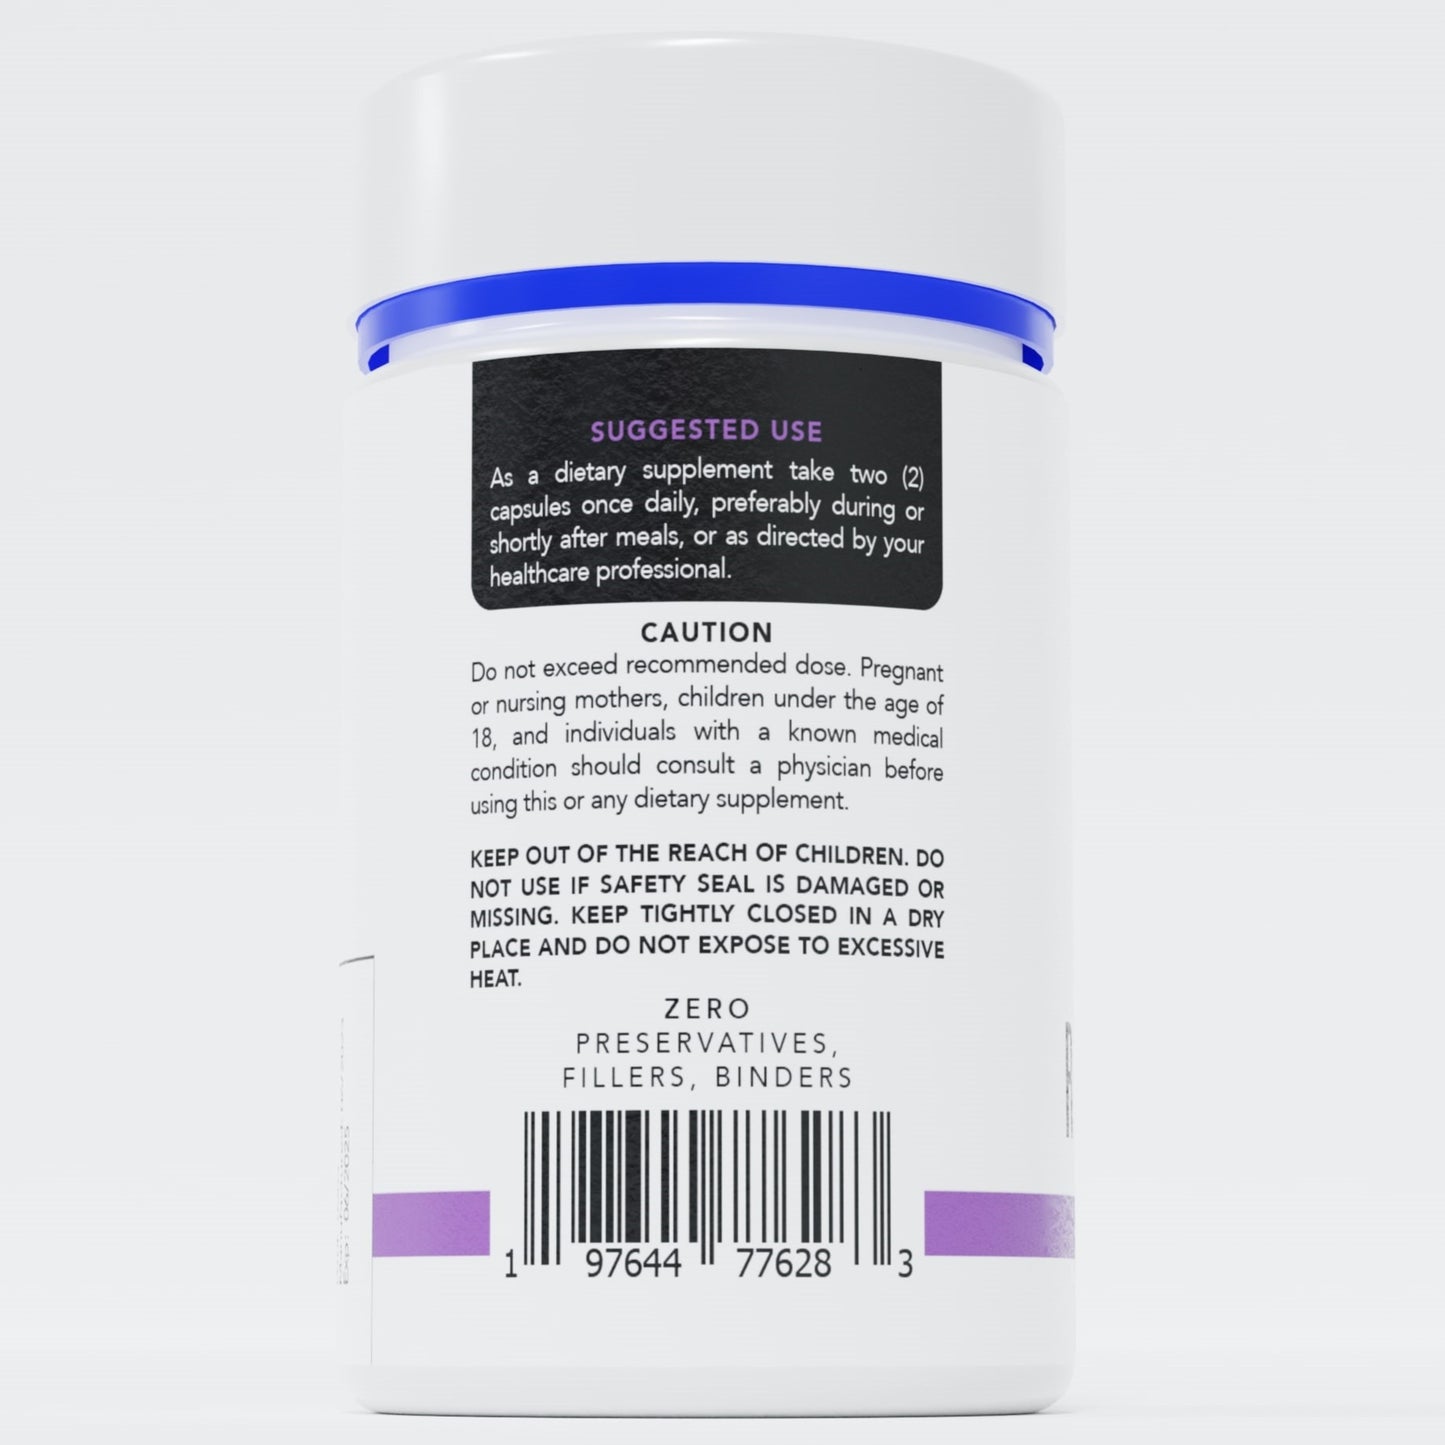 Trans-Resveratrol - 60 500mg capsules